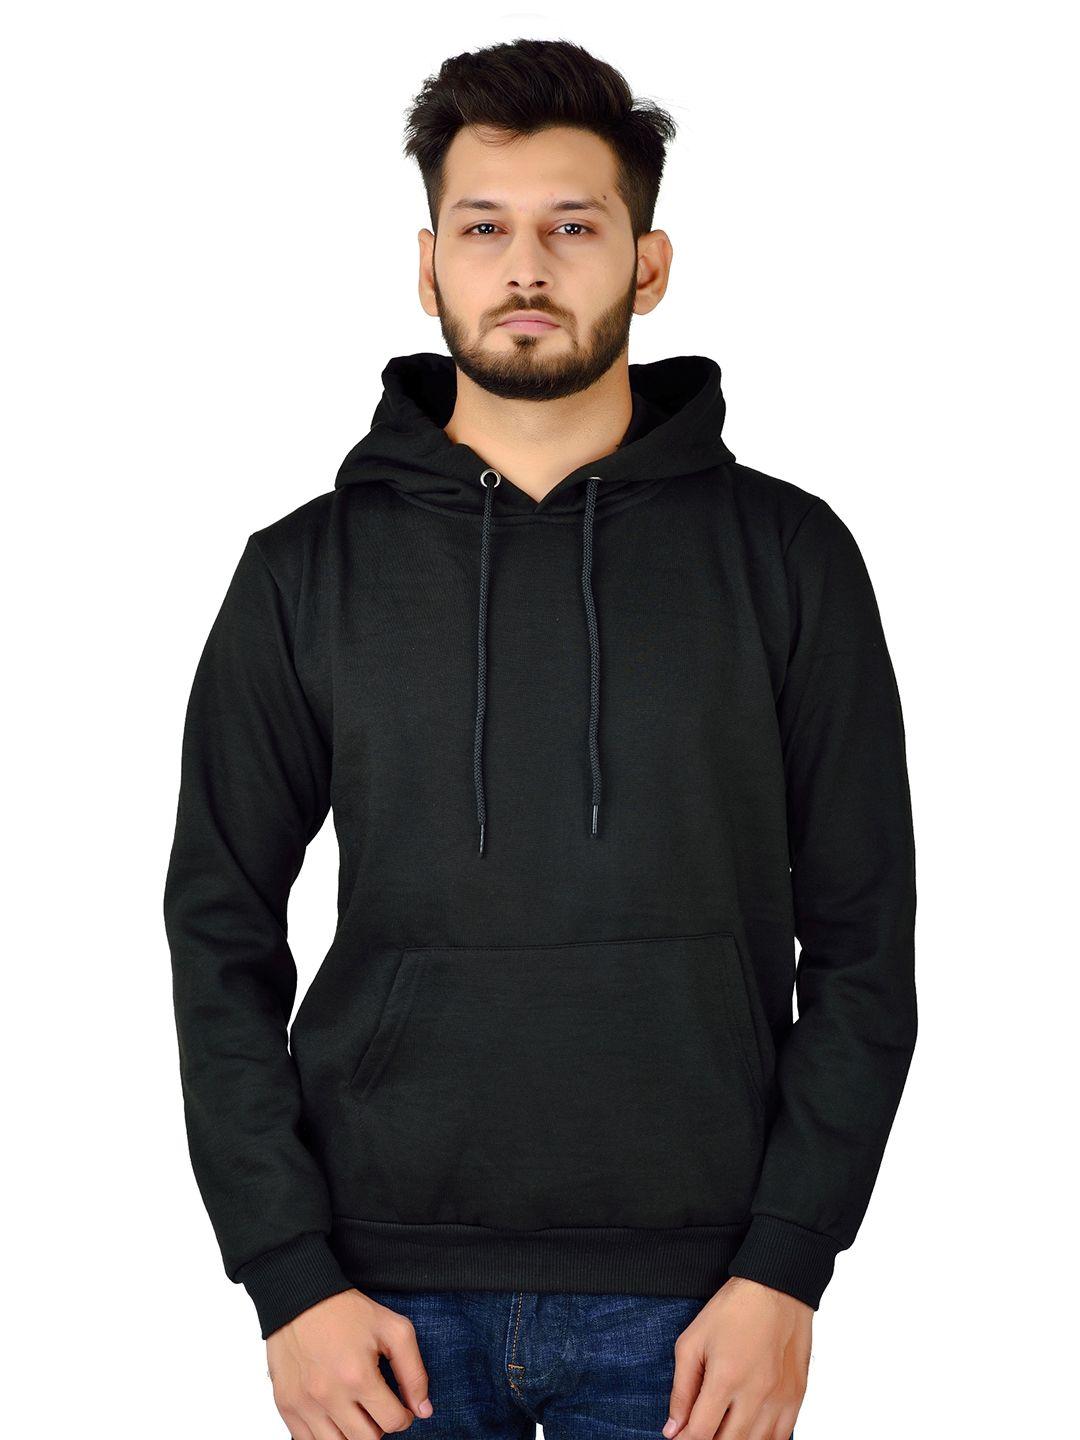 divra clothing unisex black hooded sweatshirt